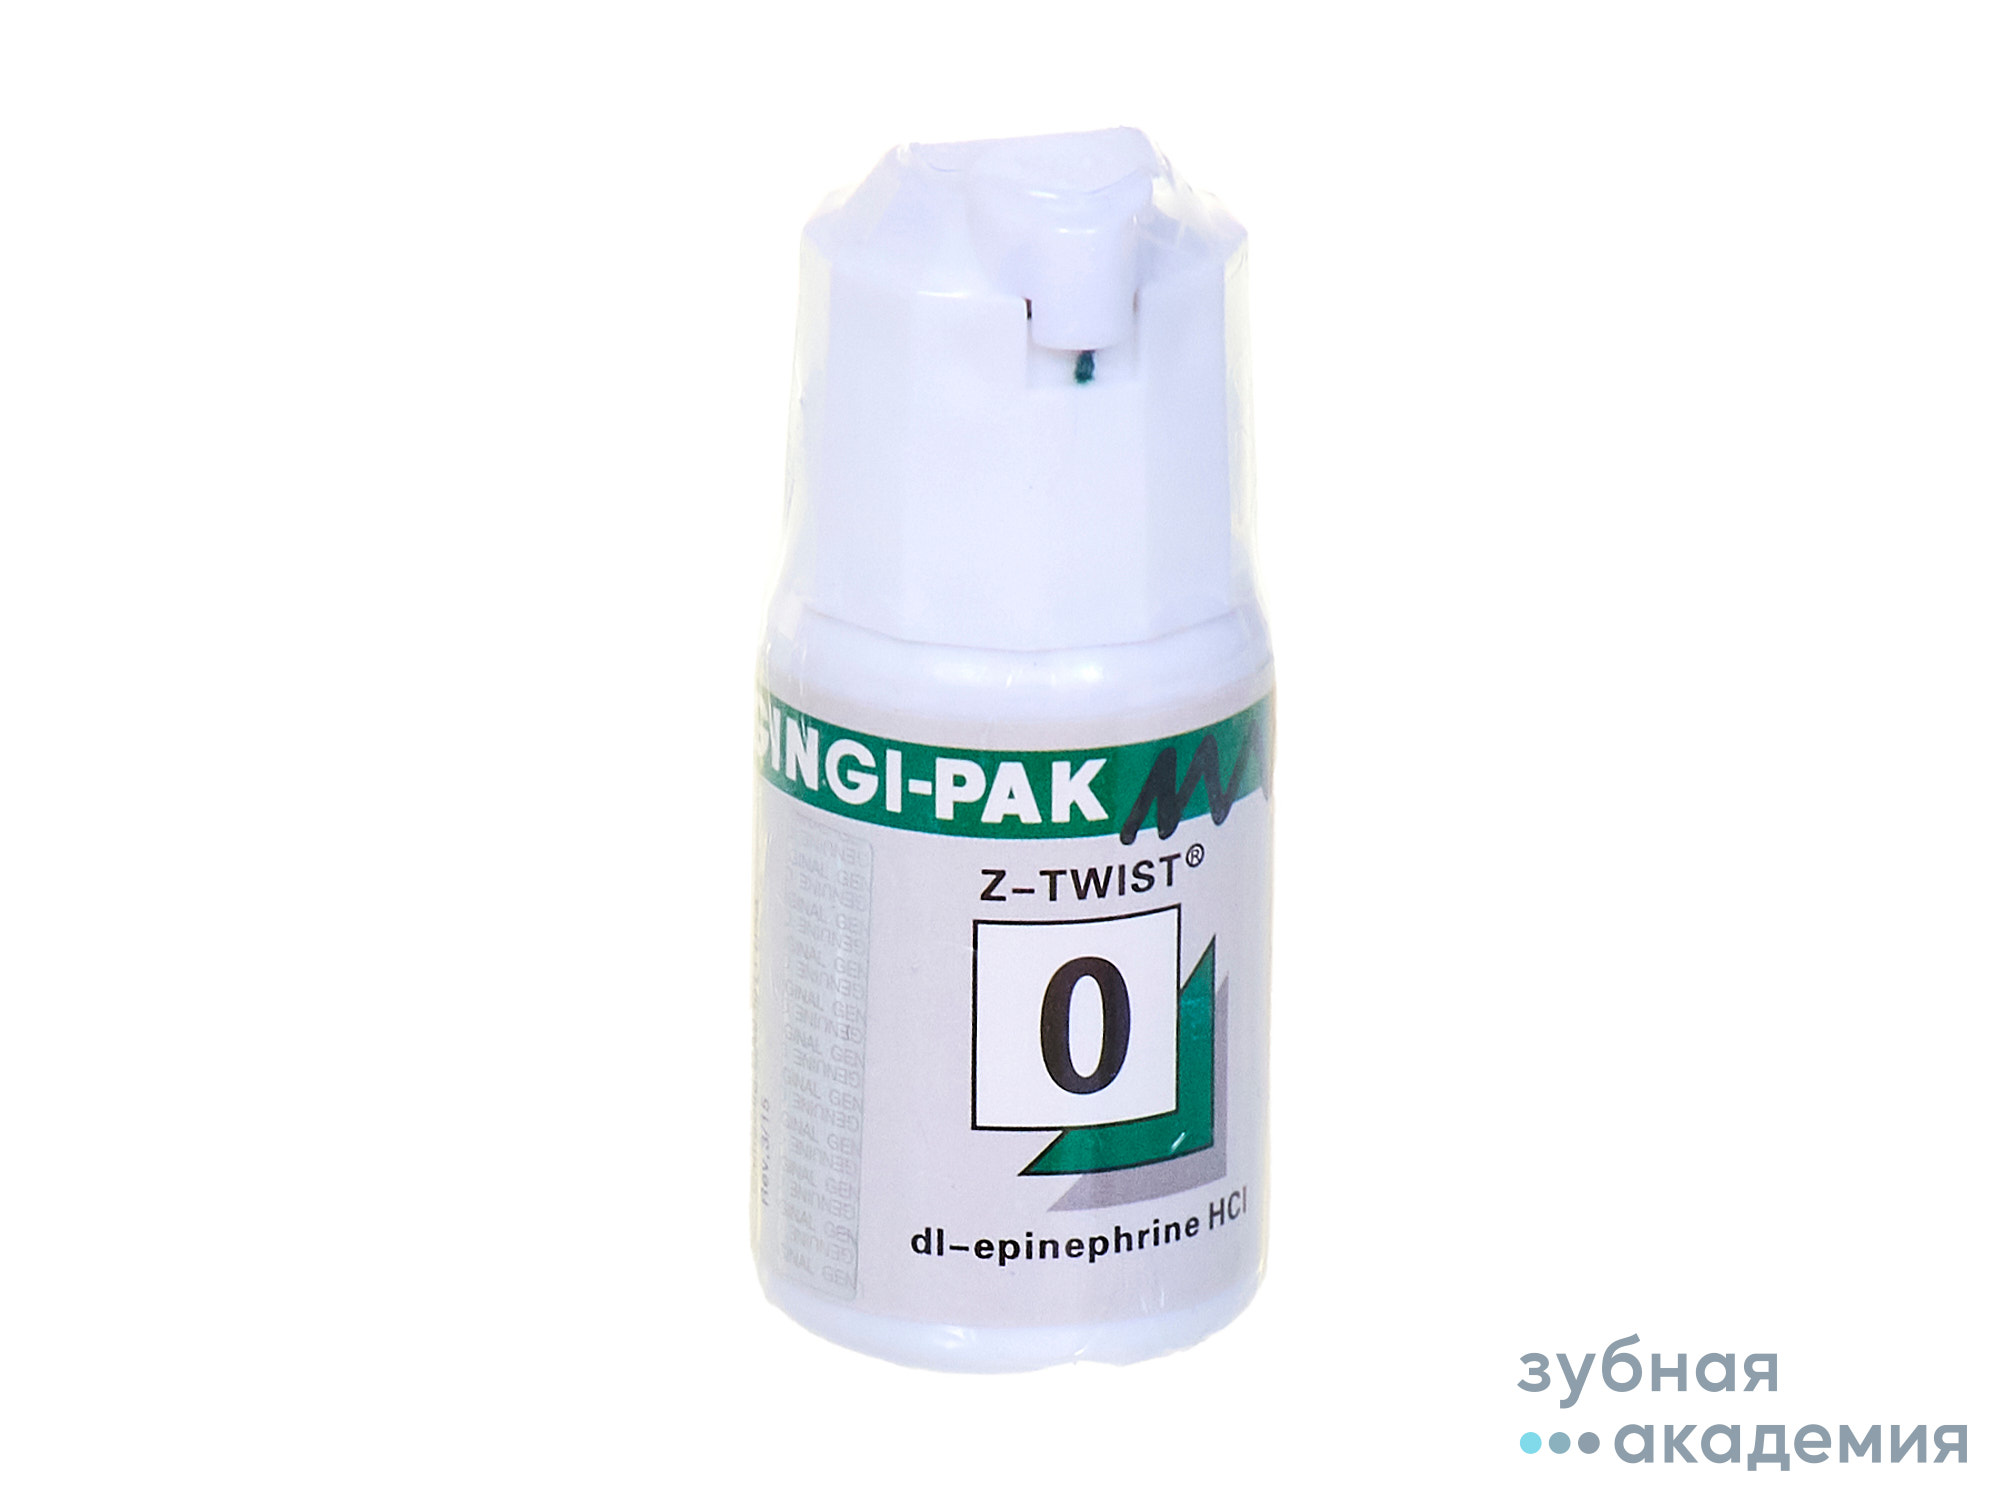 Ретракционная нить "Gingi Pak MAX" № 0 упаковка 2,74 м /Gingi Pak/ США